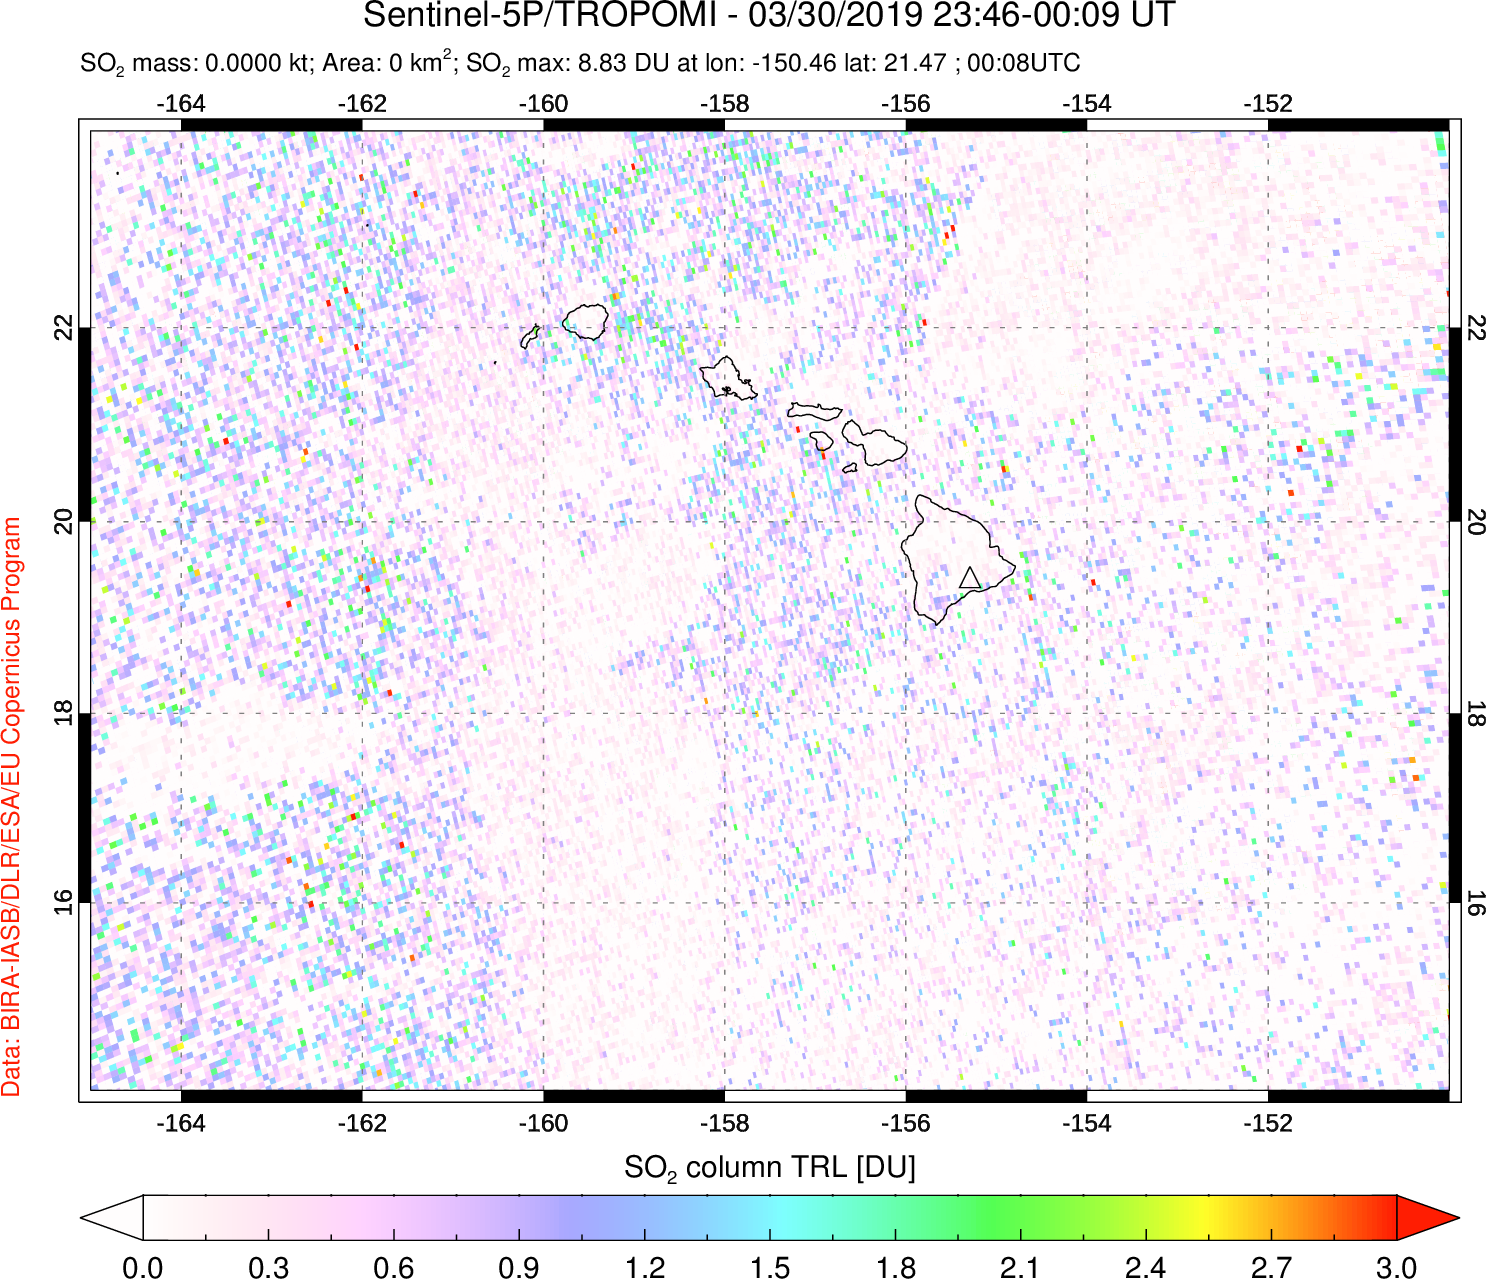 A sulfur dioxide image over Hawaii, USA on Mar 30, 2019.